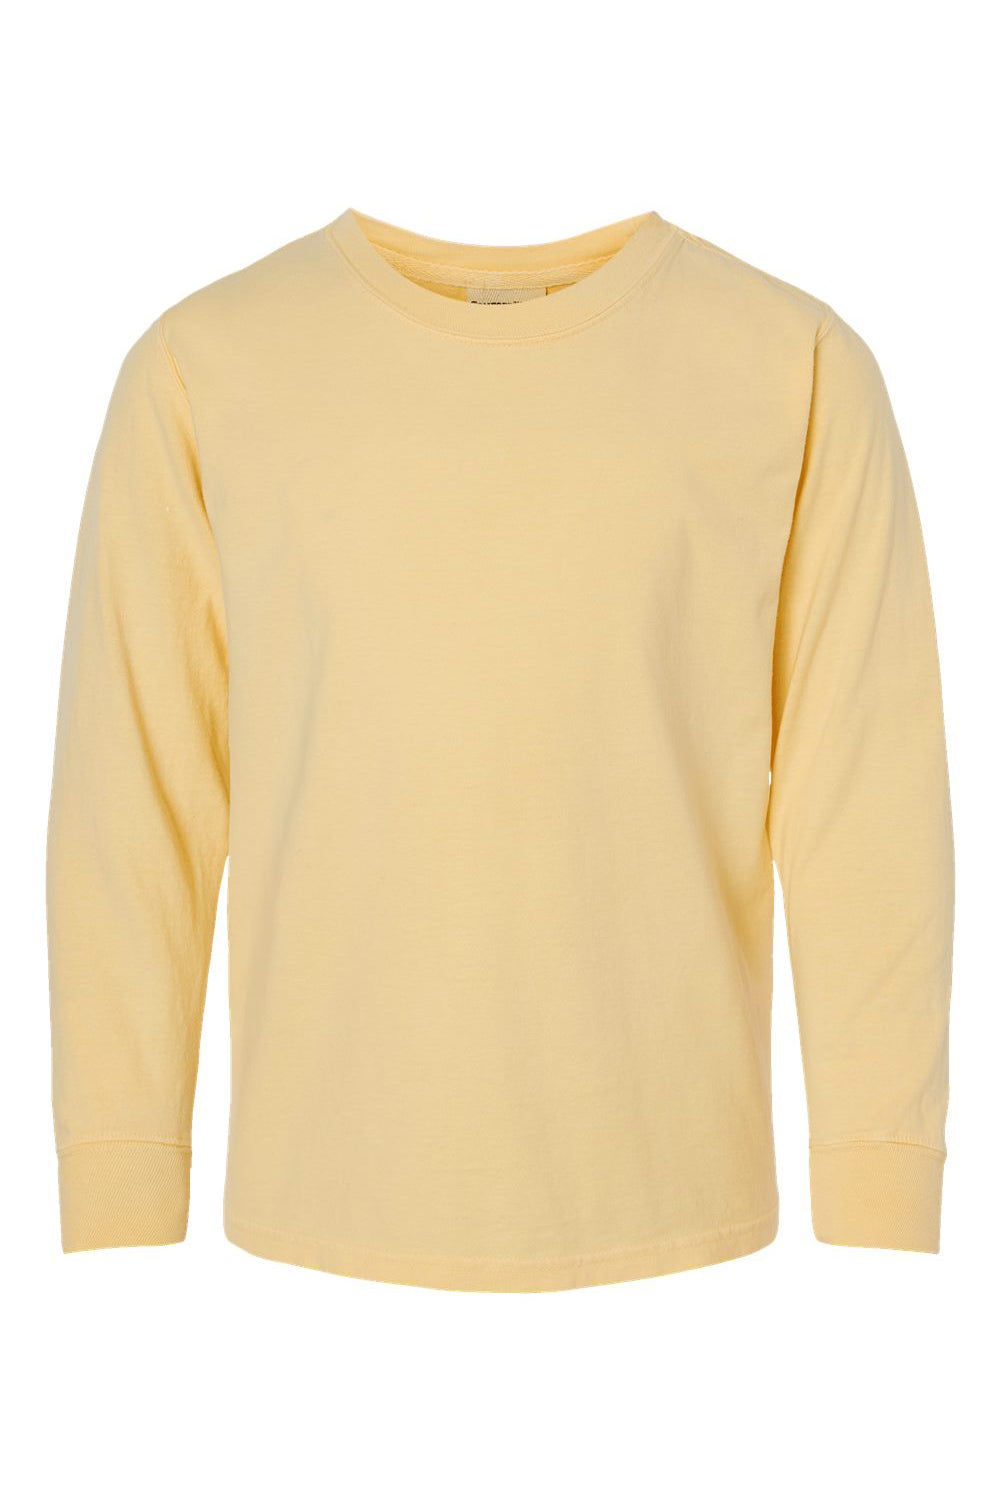 ComfortWash By Hanes GDH275 Youth Garment Dyed Long Sleeve Crewneck T-Shirt Summer Squash Yellow Flat Front